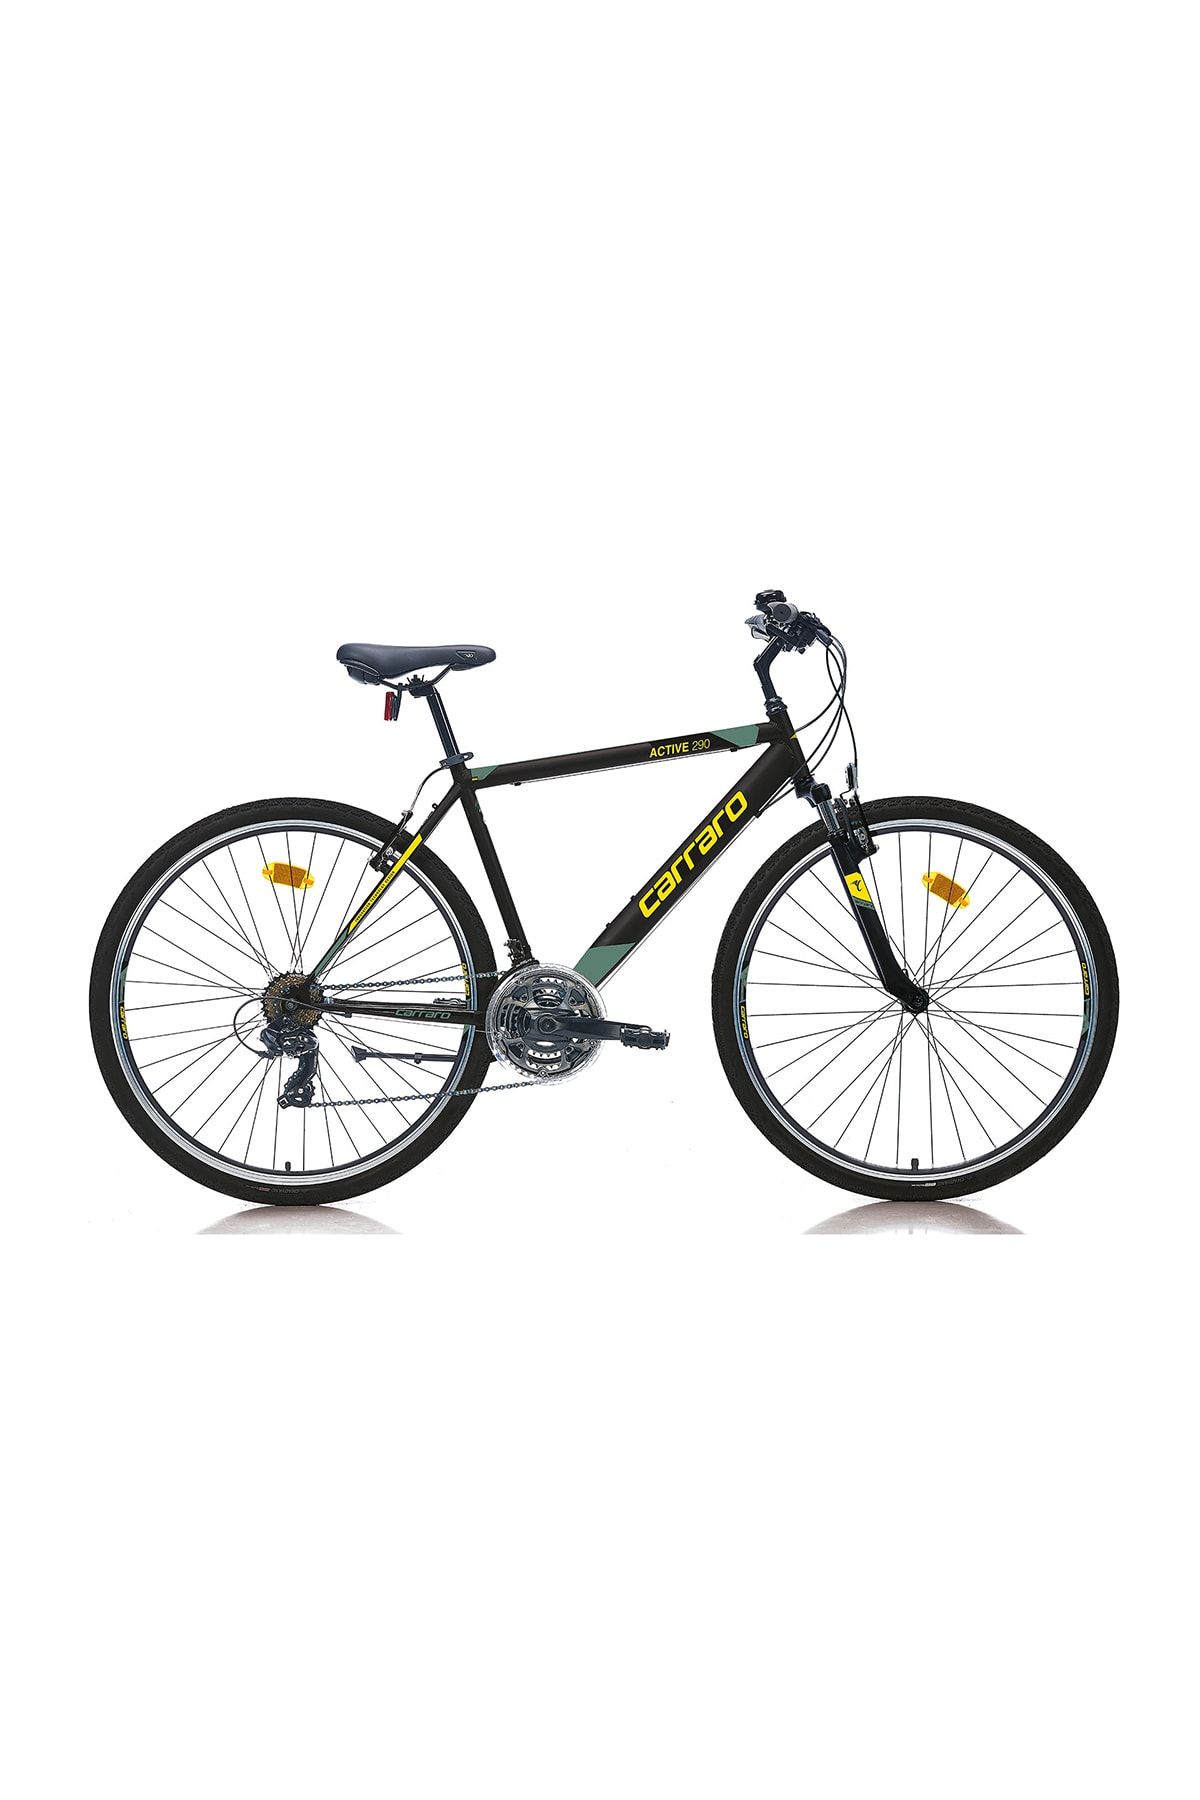 Carraro Active 290 28 Jant Şehir & Tur Bisikleti (mat Siyah Sarı Yeşil) 52 Cm